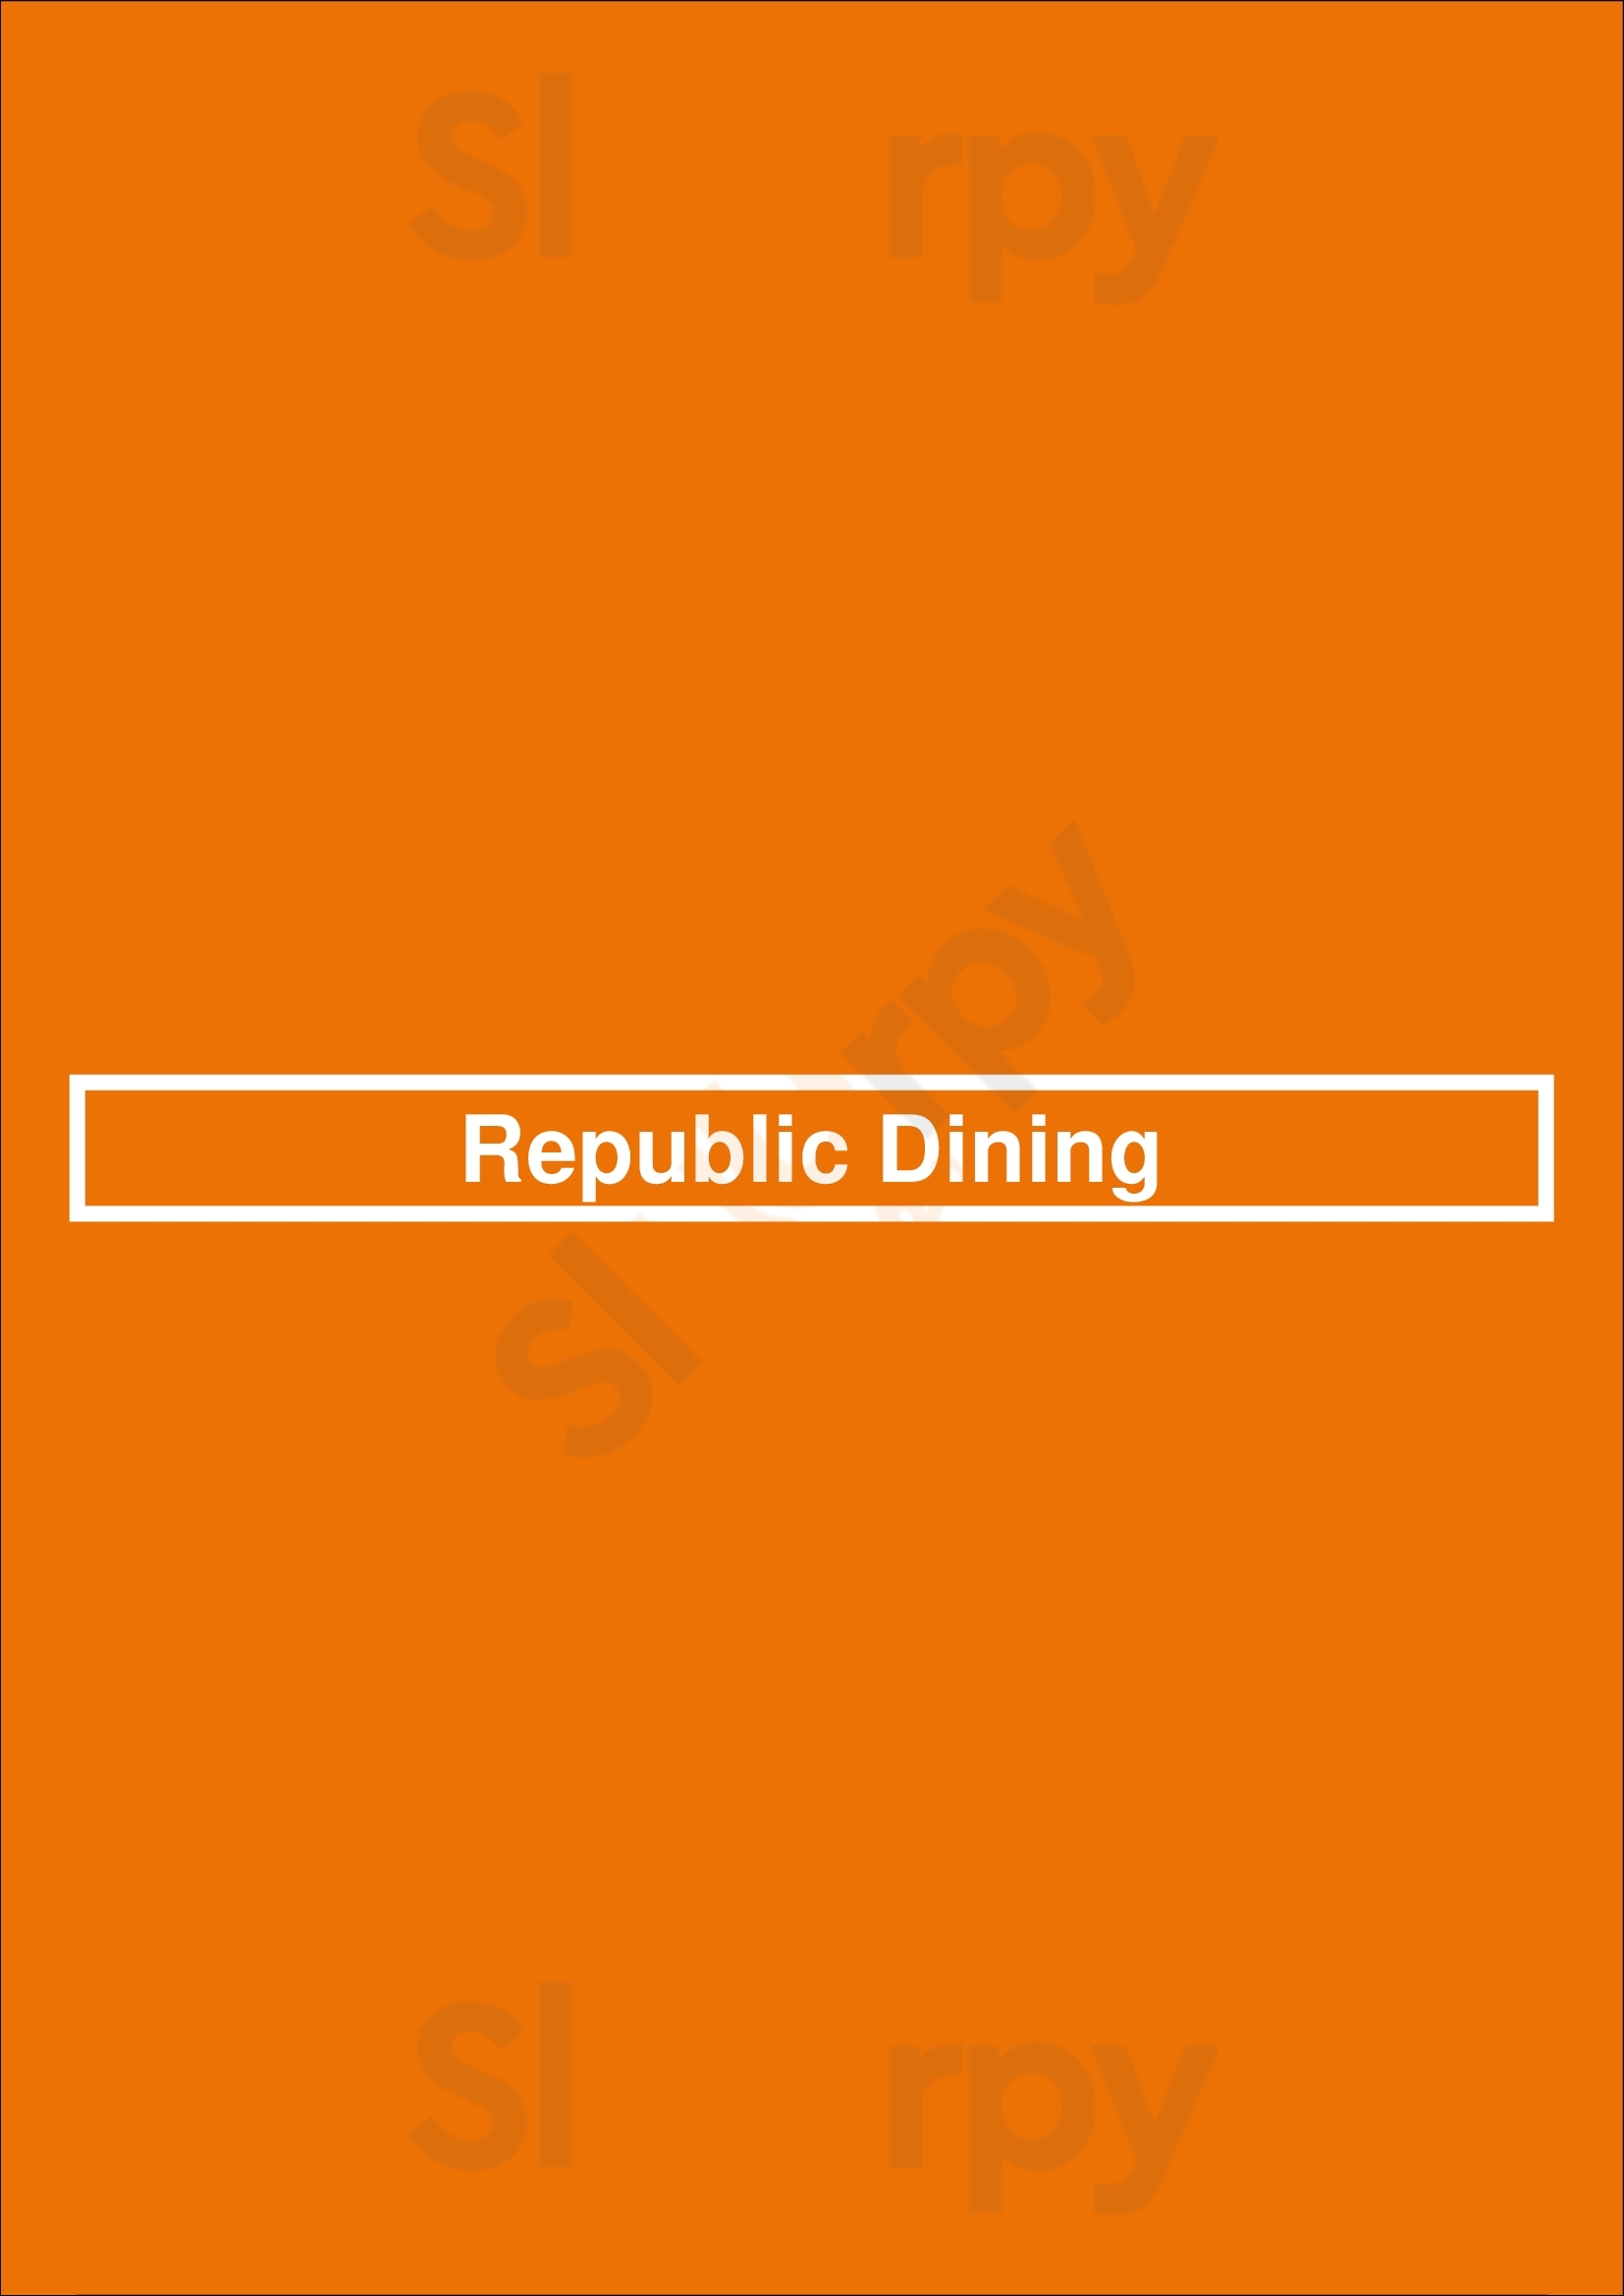 Republic Dining Sydney Menu - 1